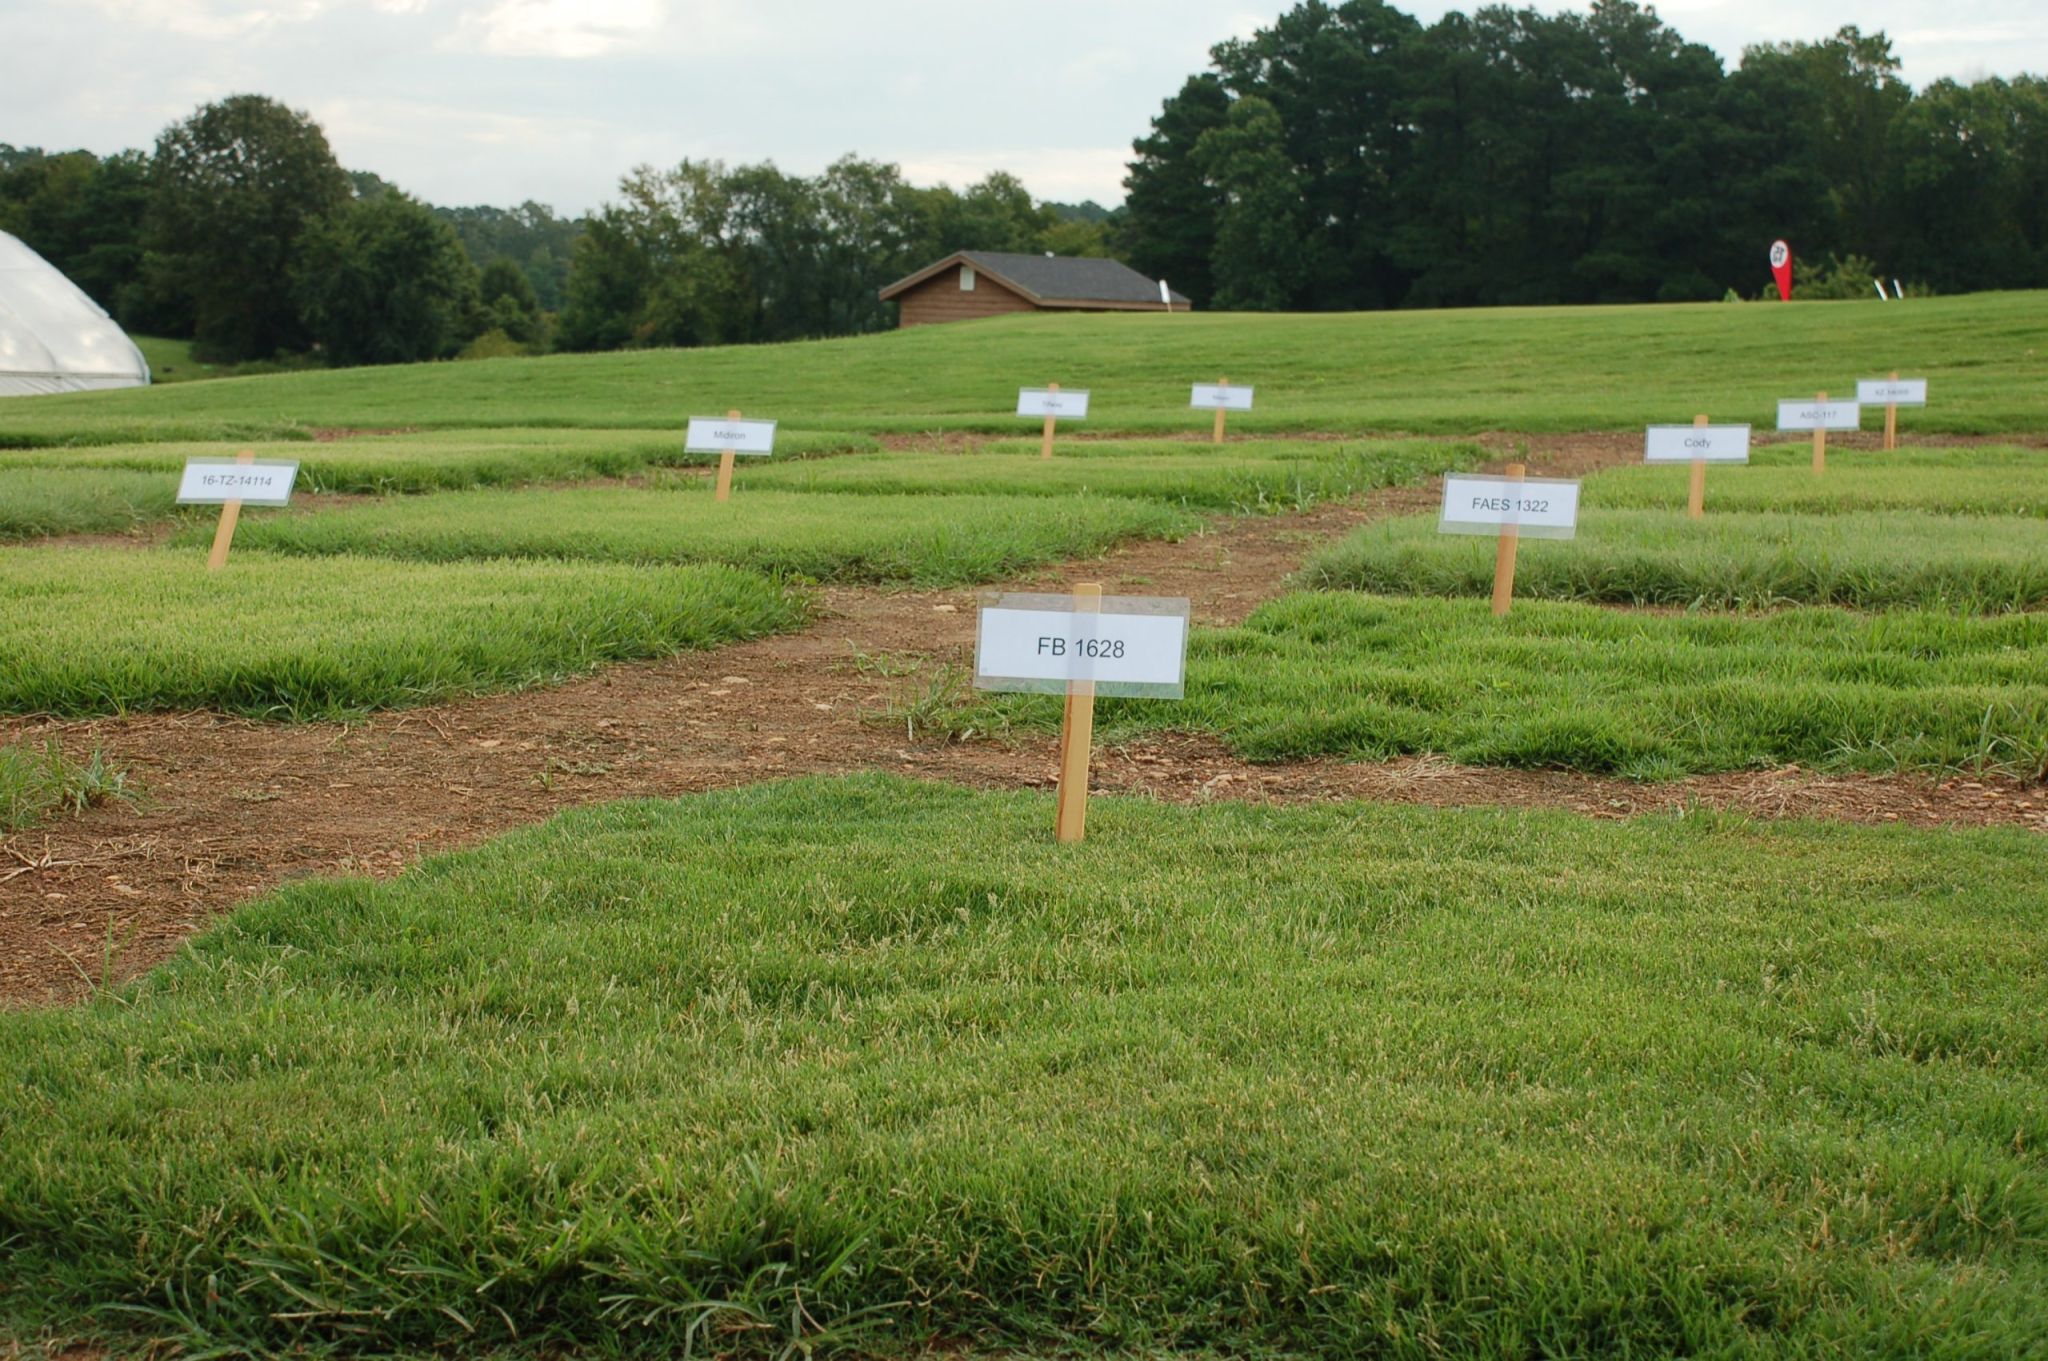 warm-season turfgrass sod trial blocks